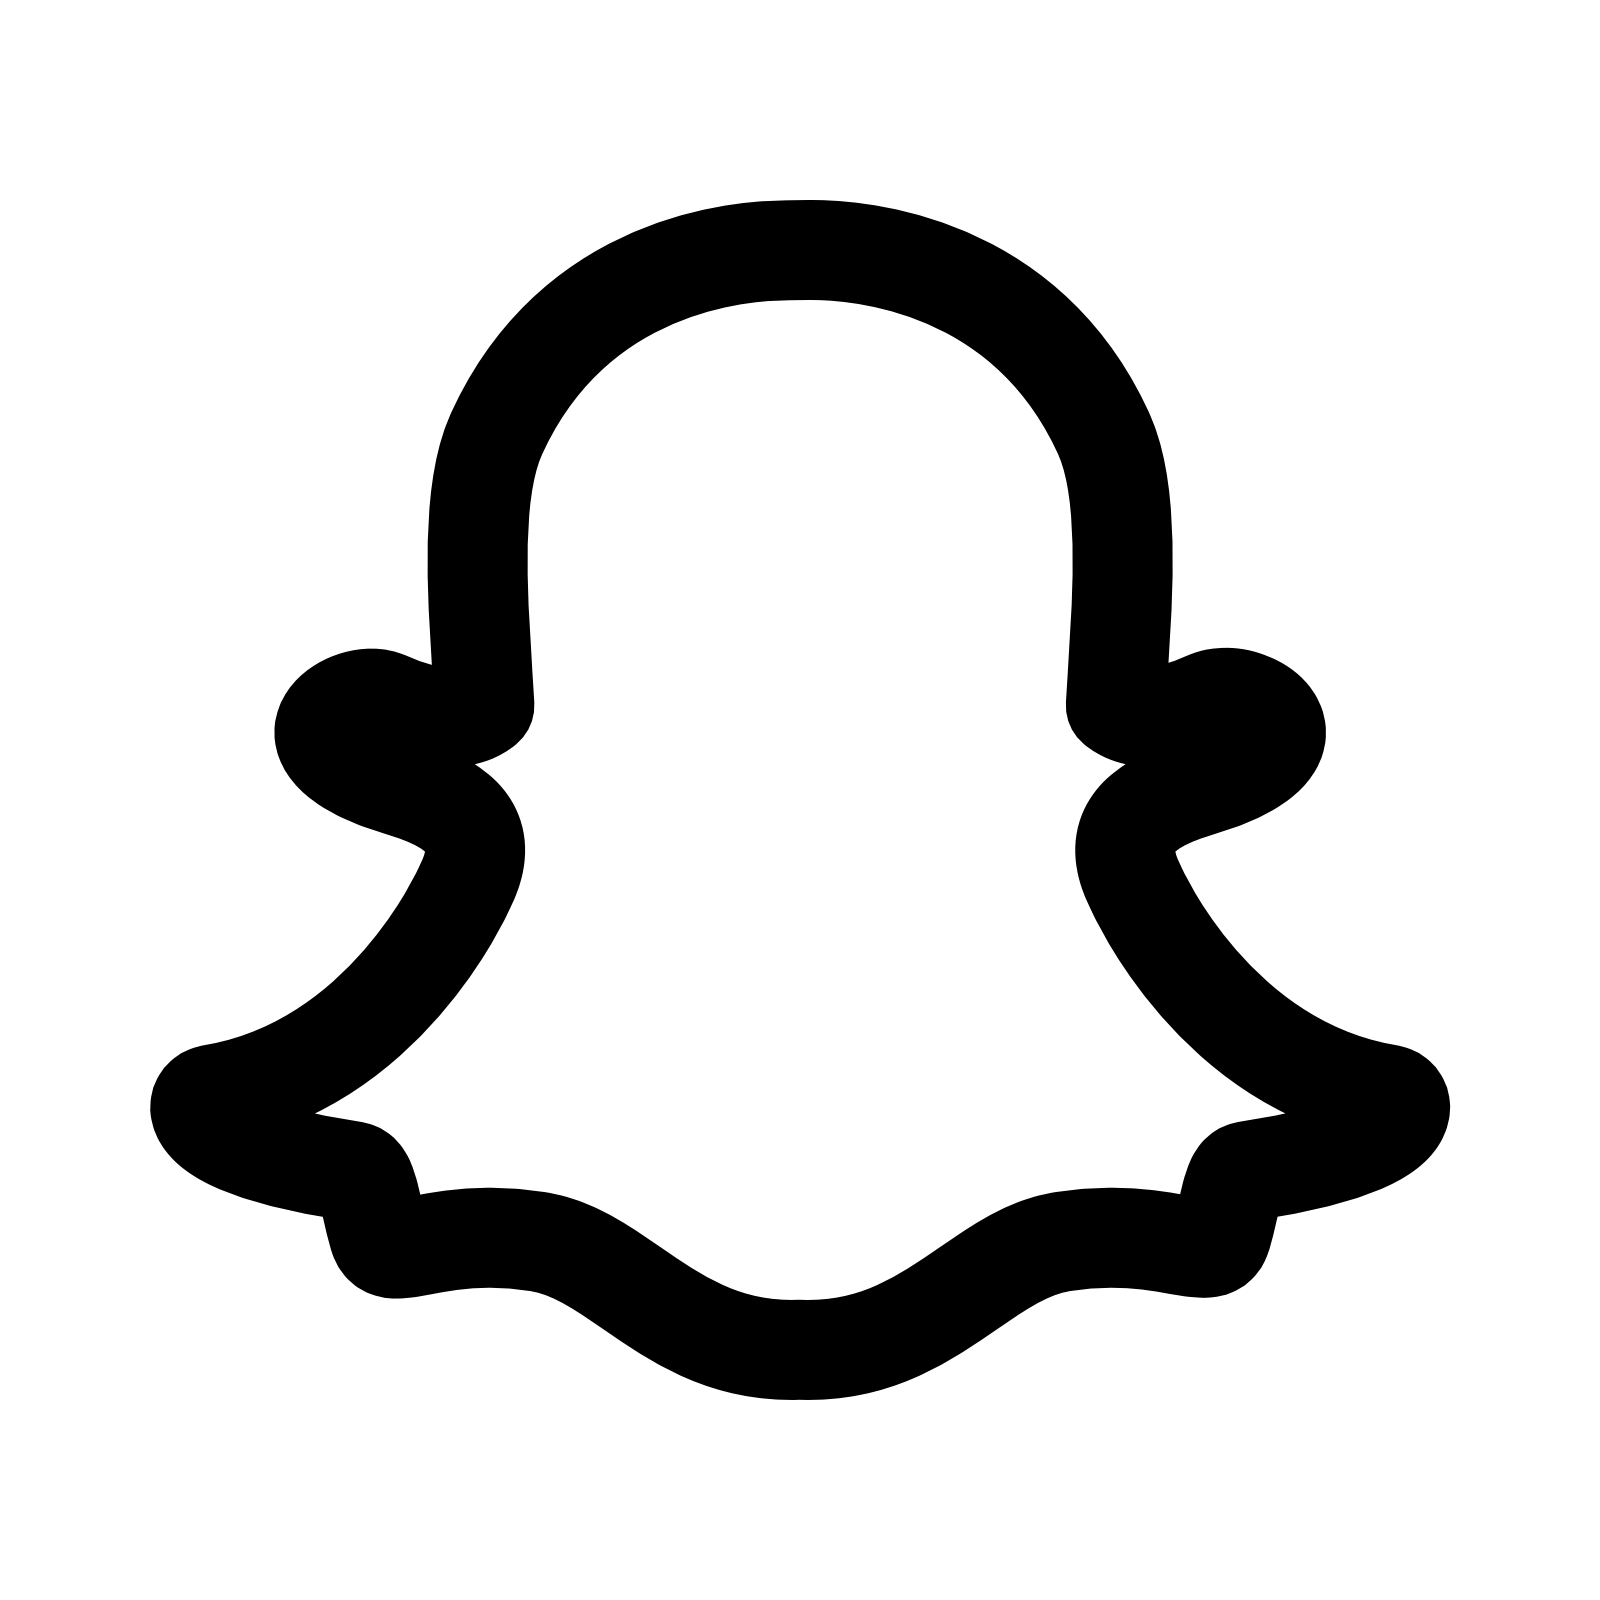 Snapchat Logo PNG HD Quality